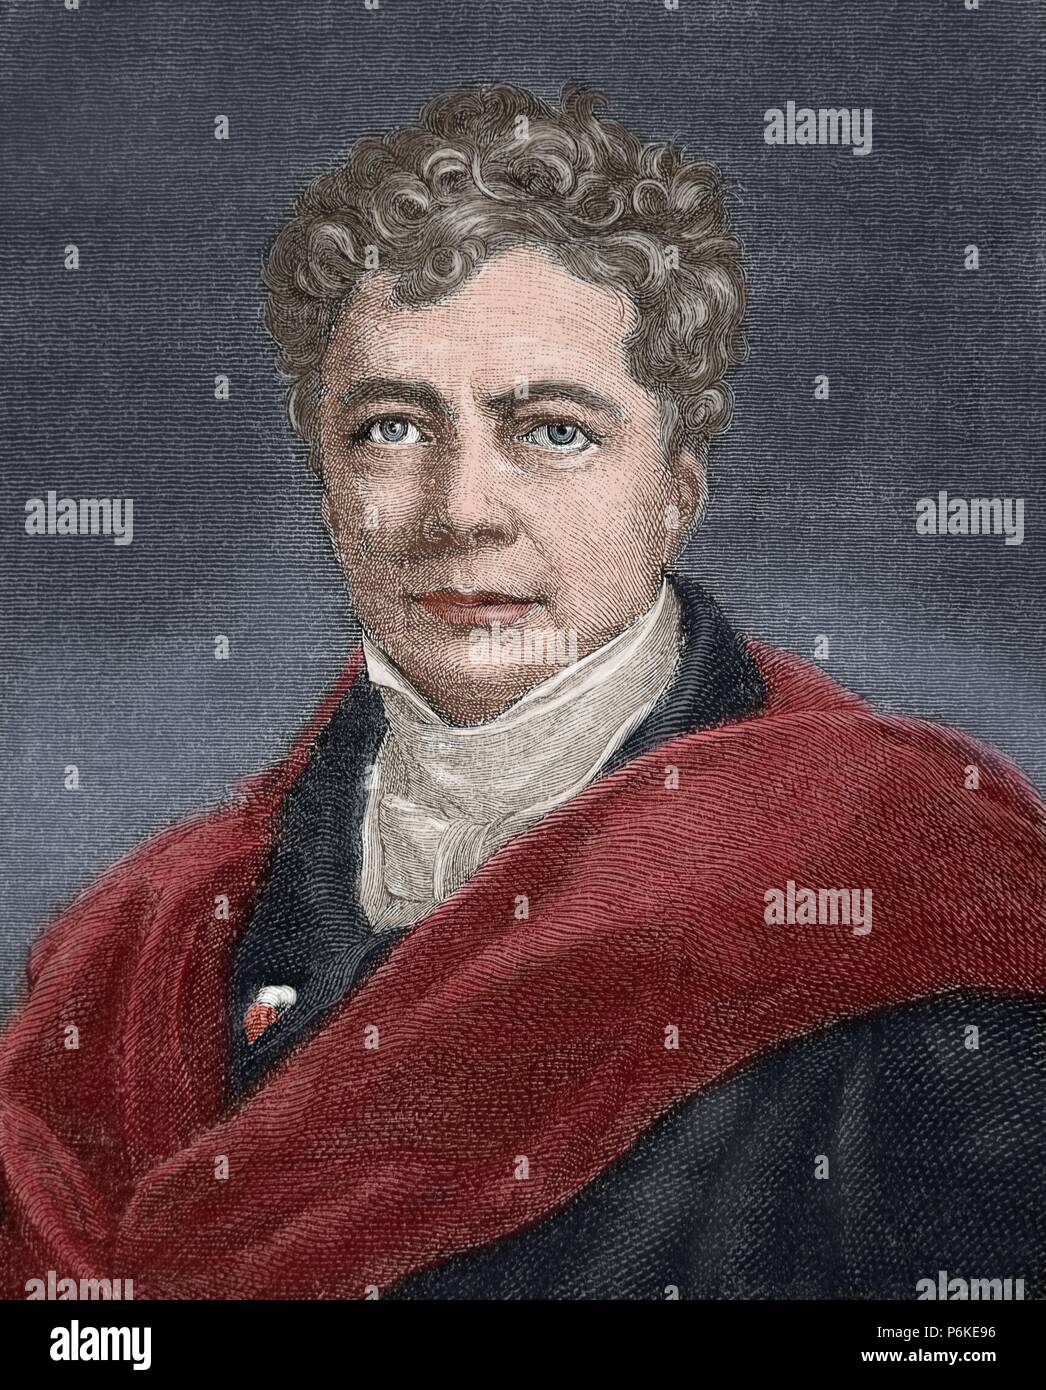 Friedrich Wilhelm Joseph Schelling (1775-1854). German philosopher. Portrait. engraving. Colored. Stock Photo